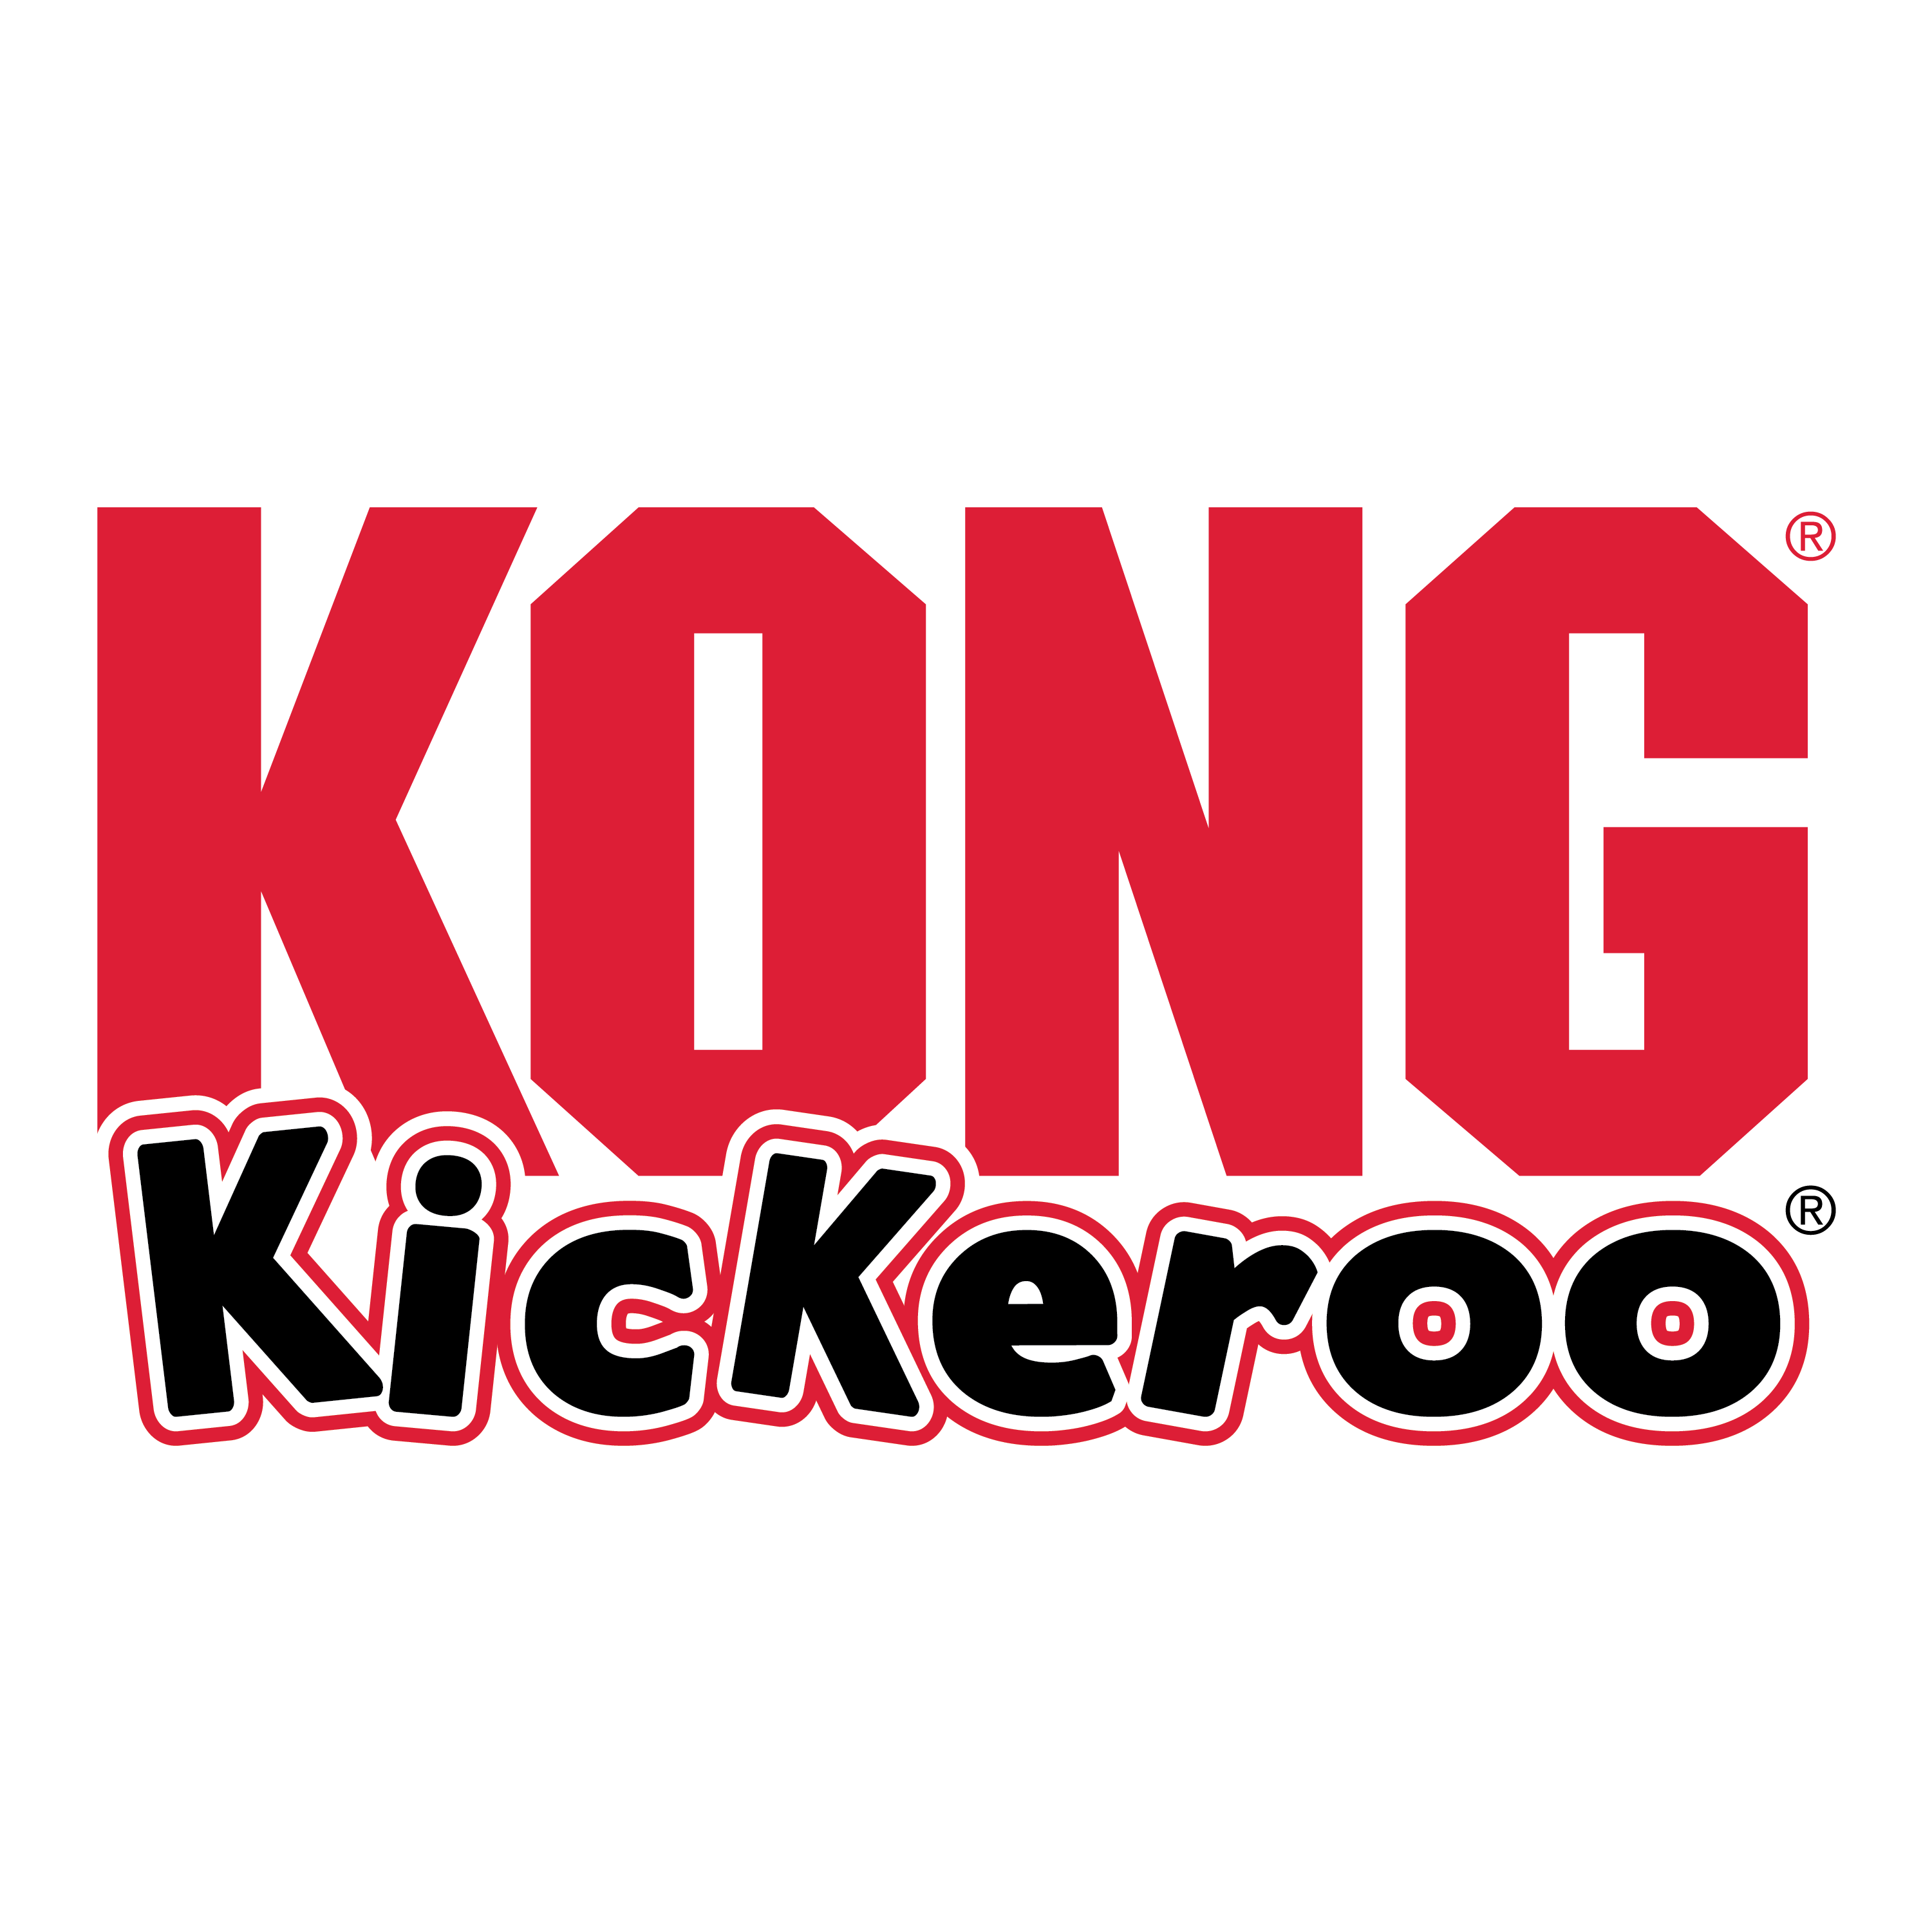 Kickeroo Pattern #1 alt1 product image